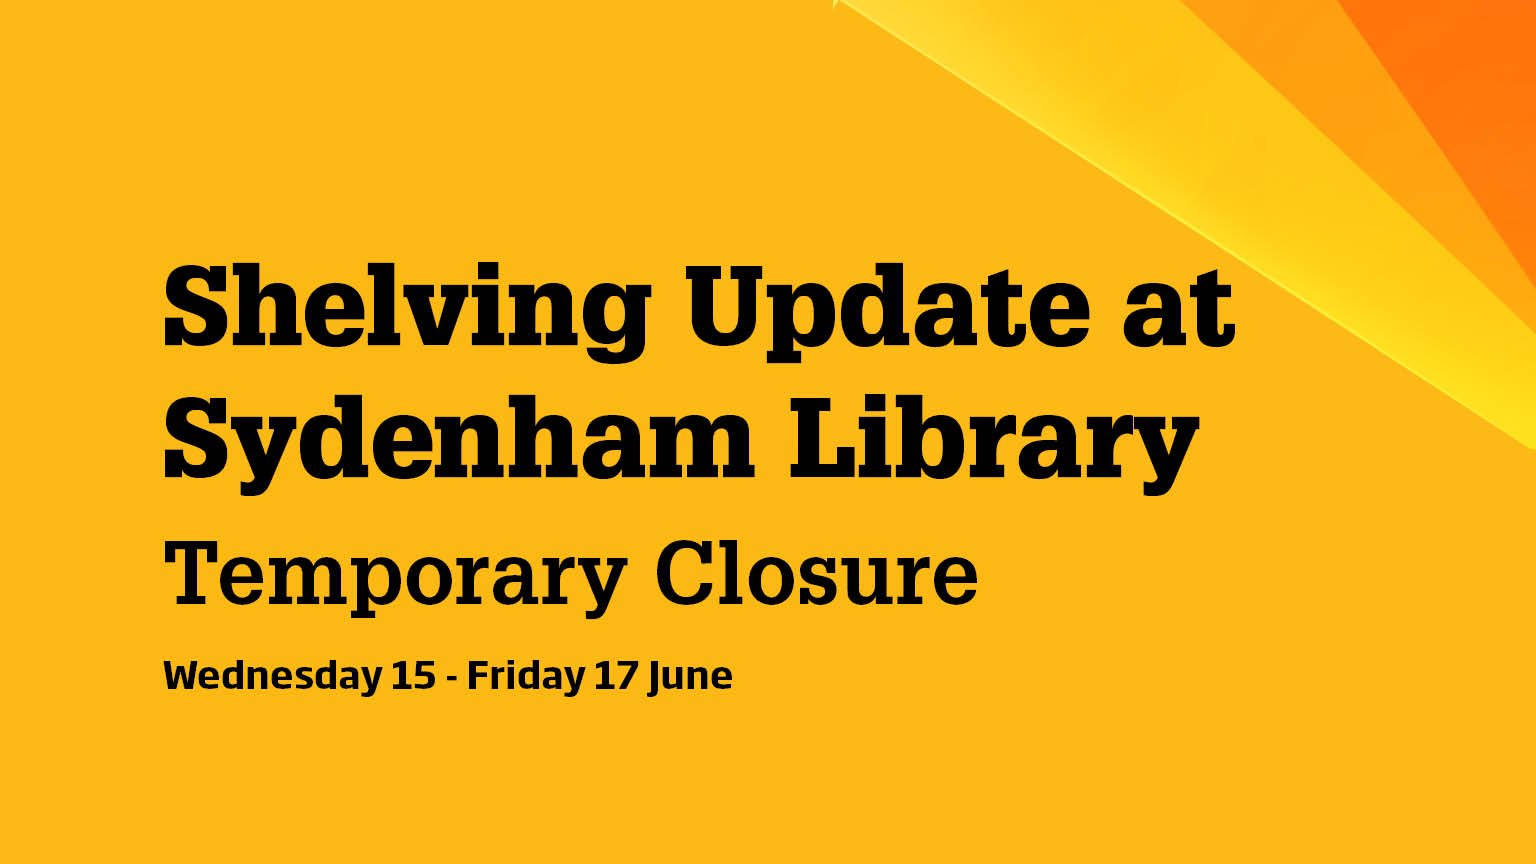 Yellow banner reading: Shelving Update at Sydenham Library Temporary Closure 15-17 June